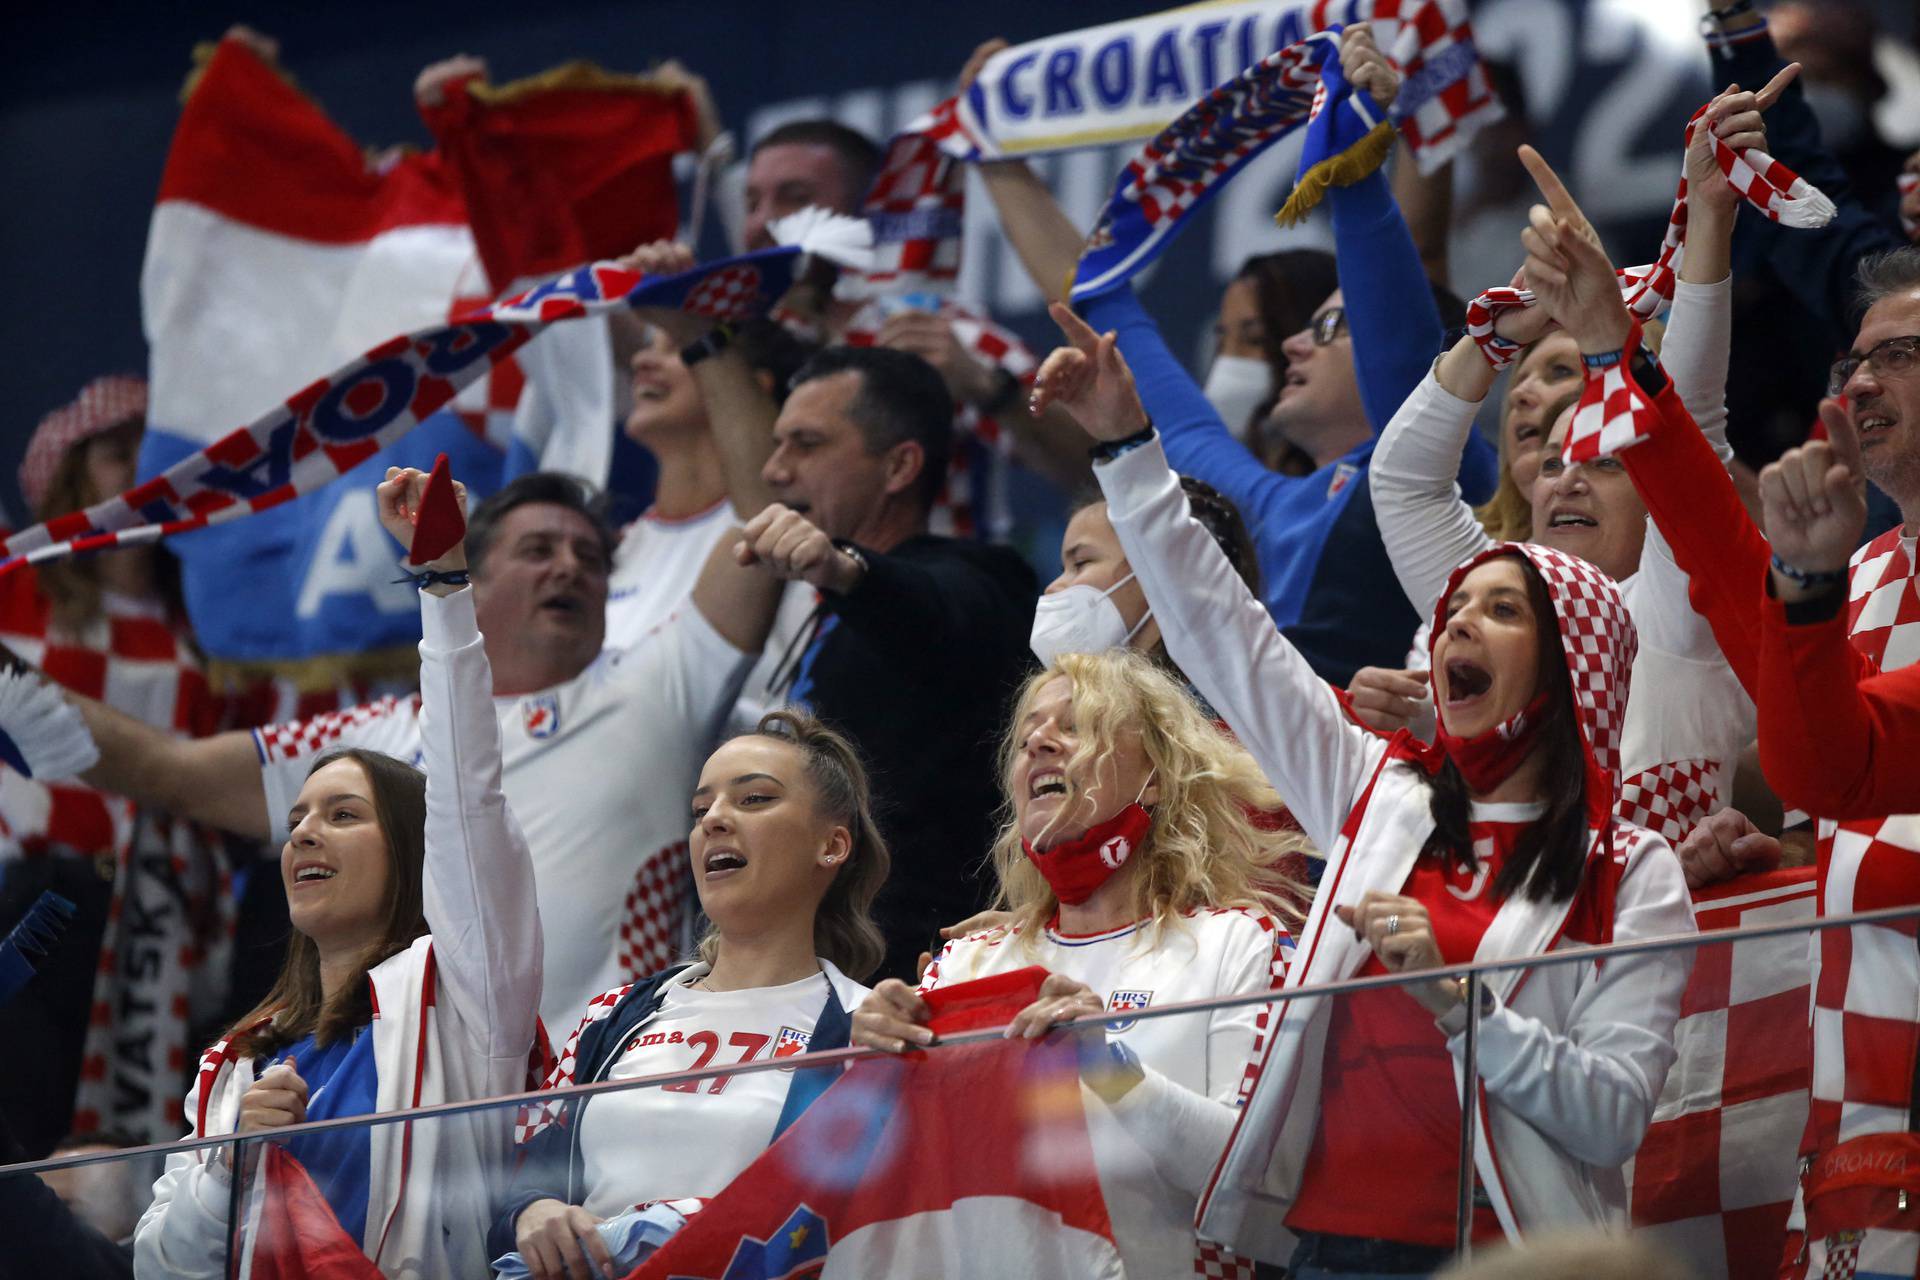 EHF 2022 Men's European Handball Championship - Group C - Ukraine v Croatia